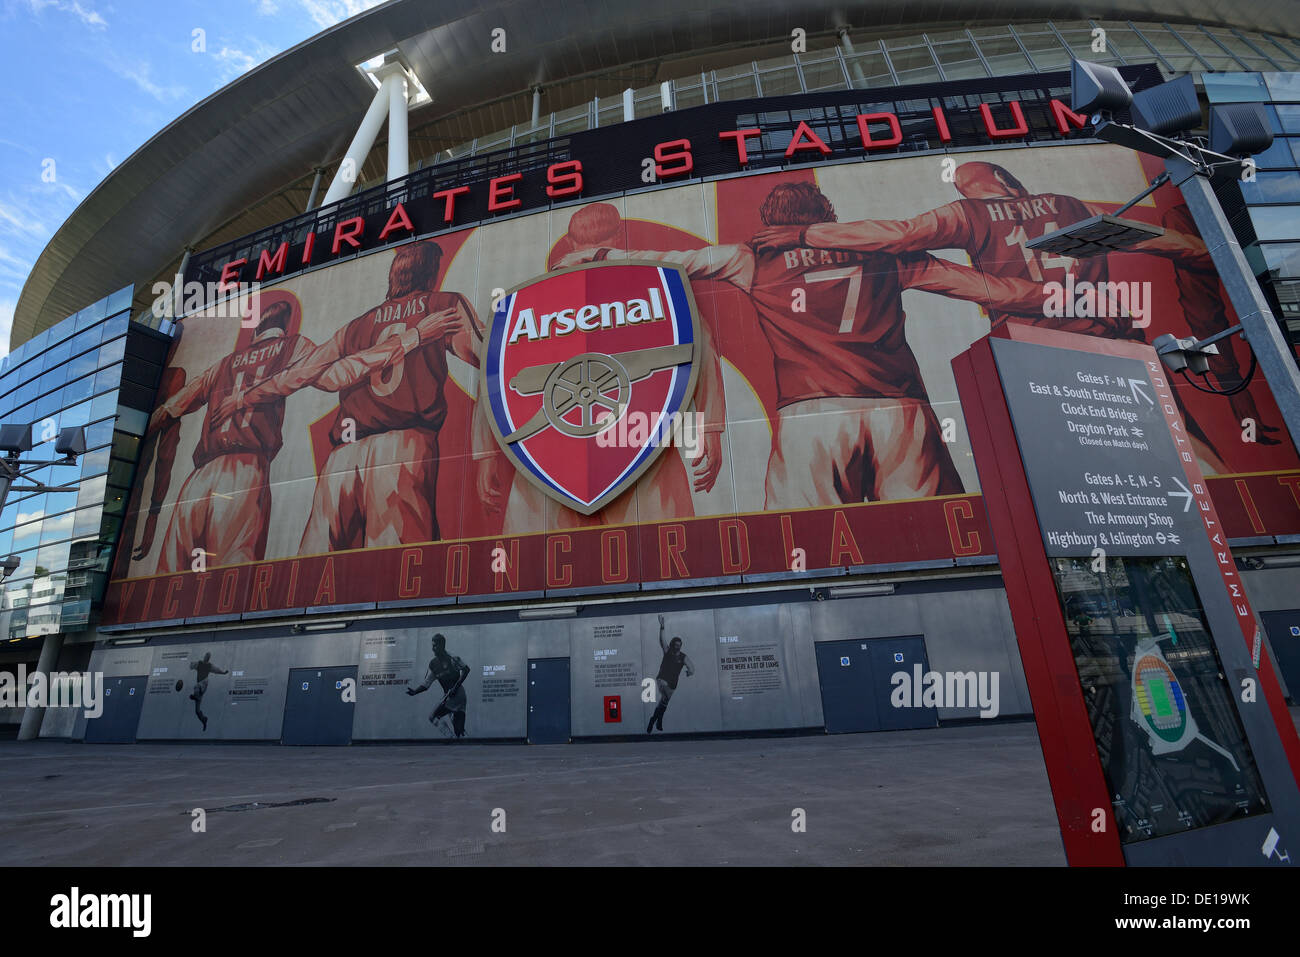 Emirates stadium at Arsenal Stock Photo